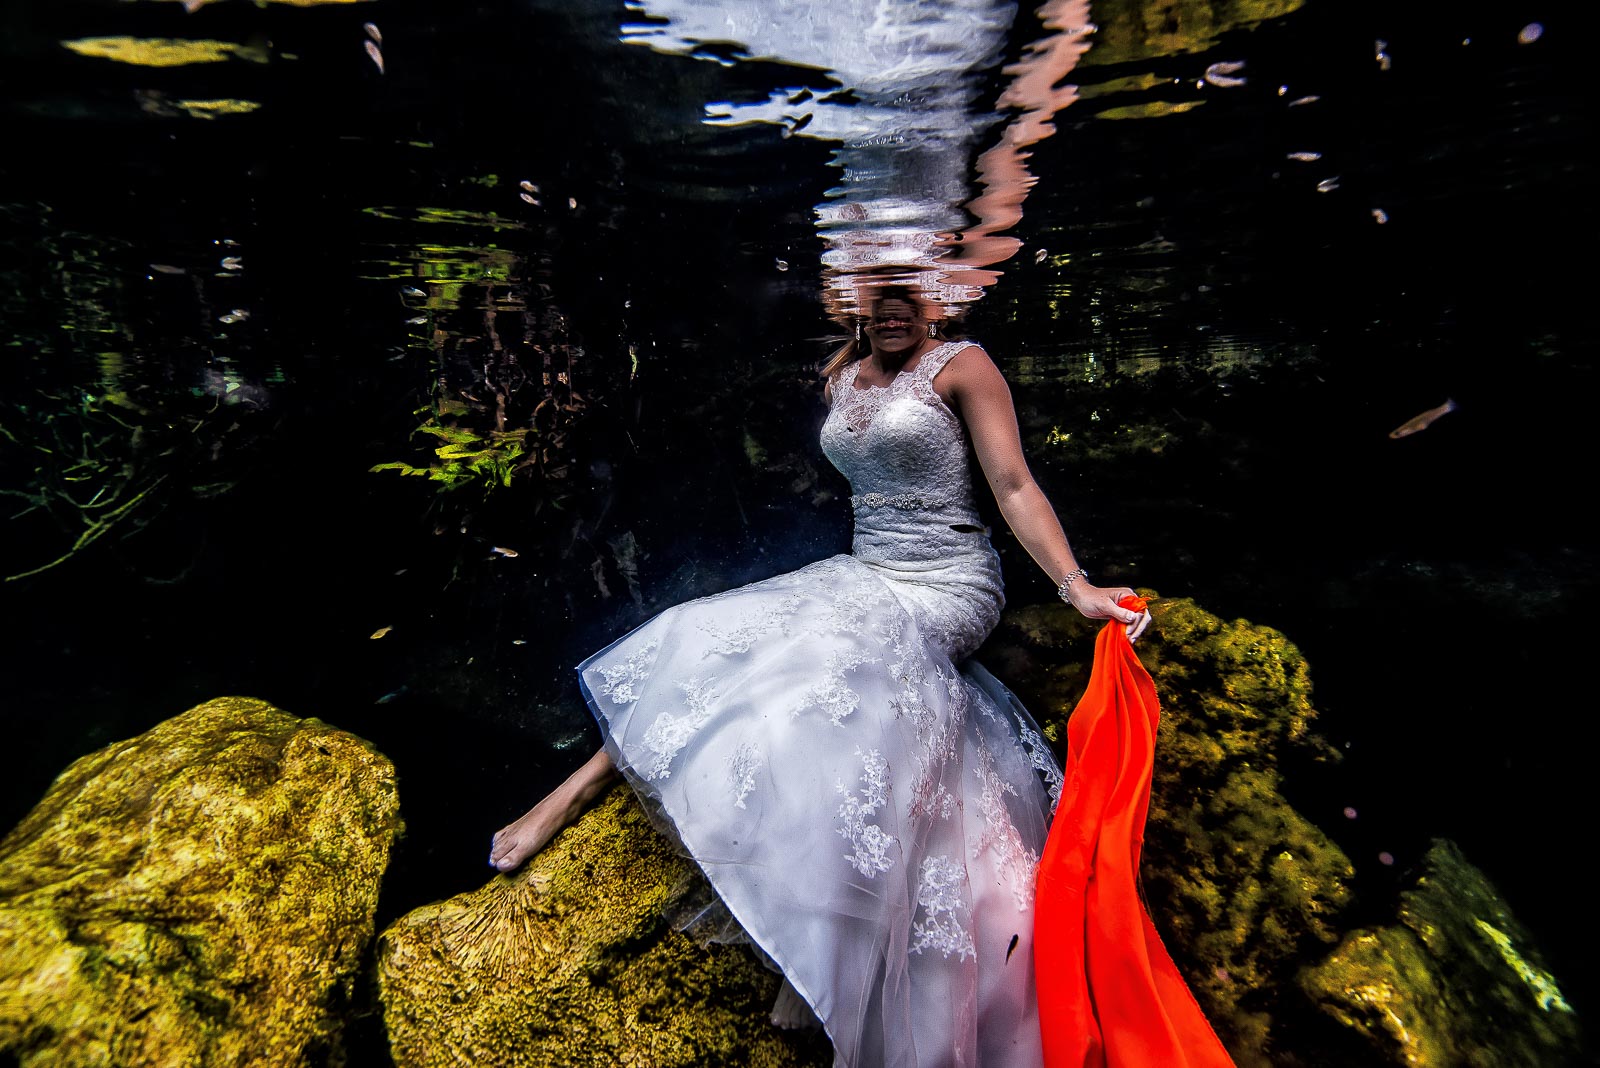 Underwater Trash The Dress